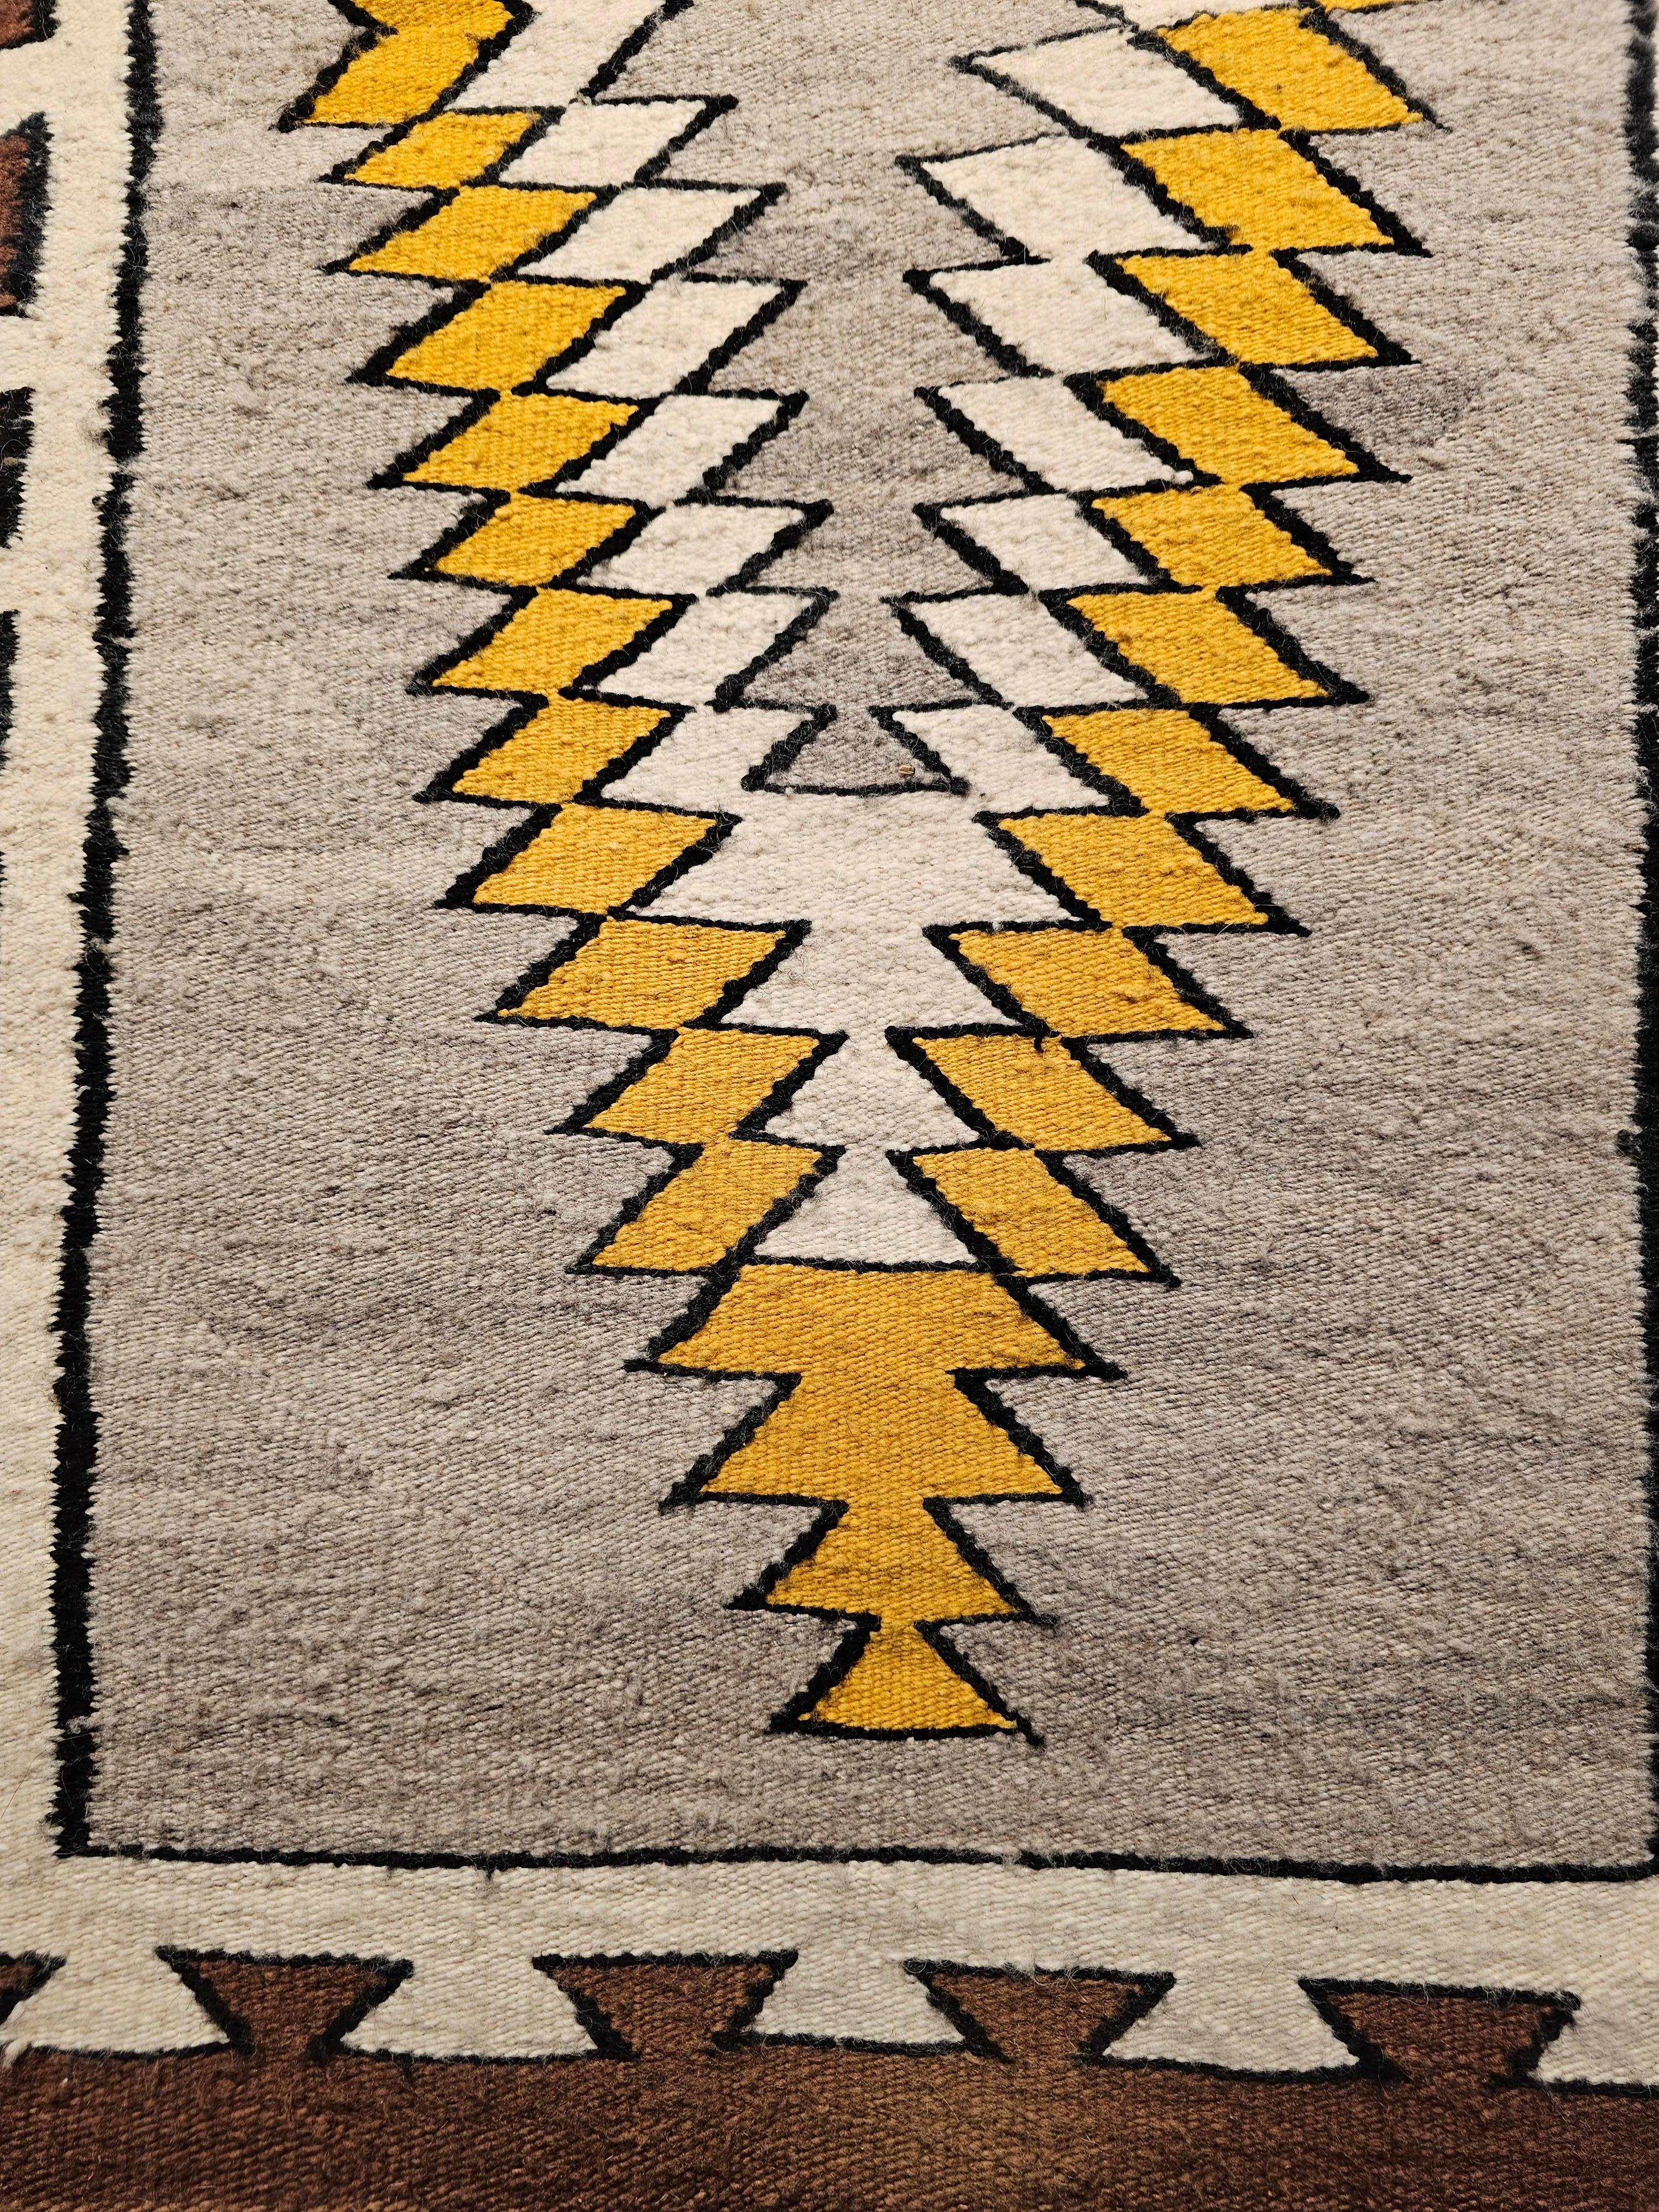 native american rug designs